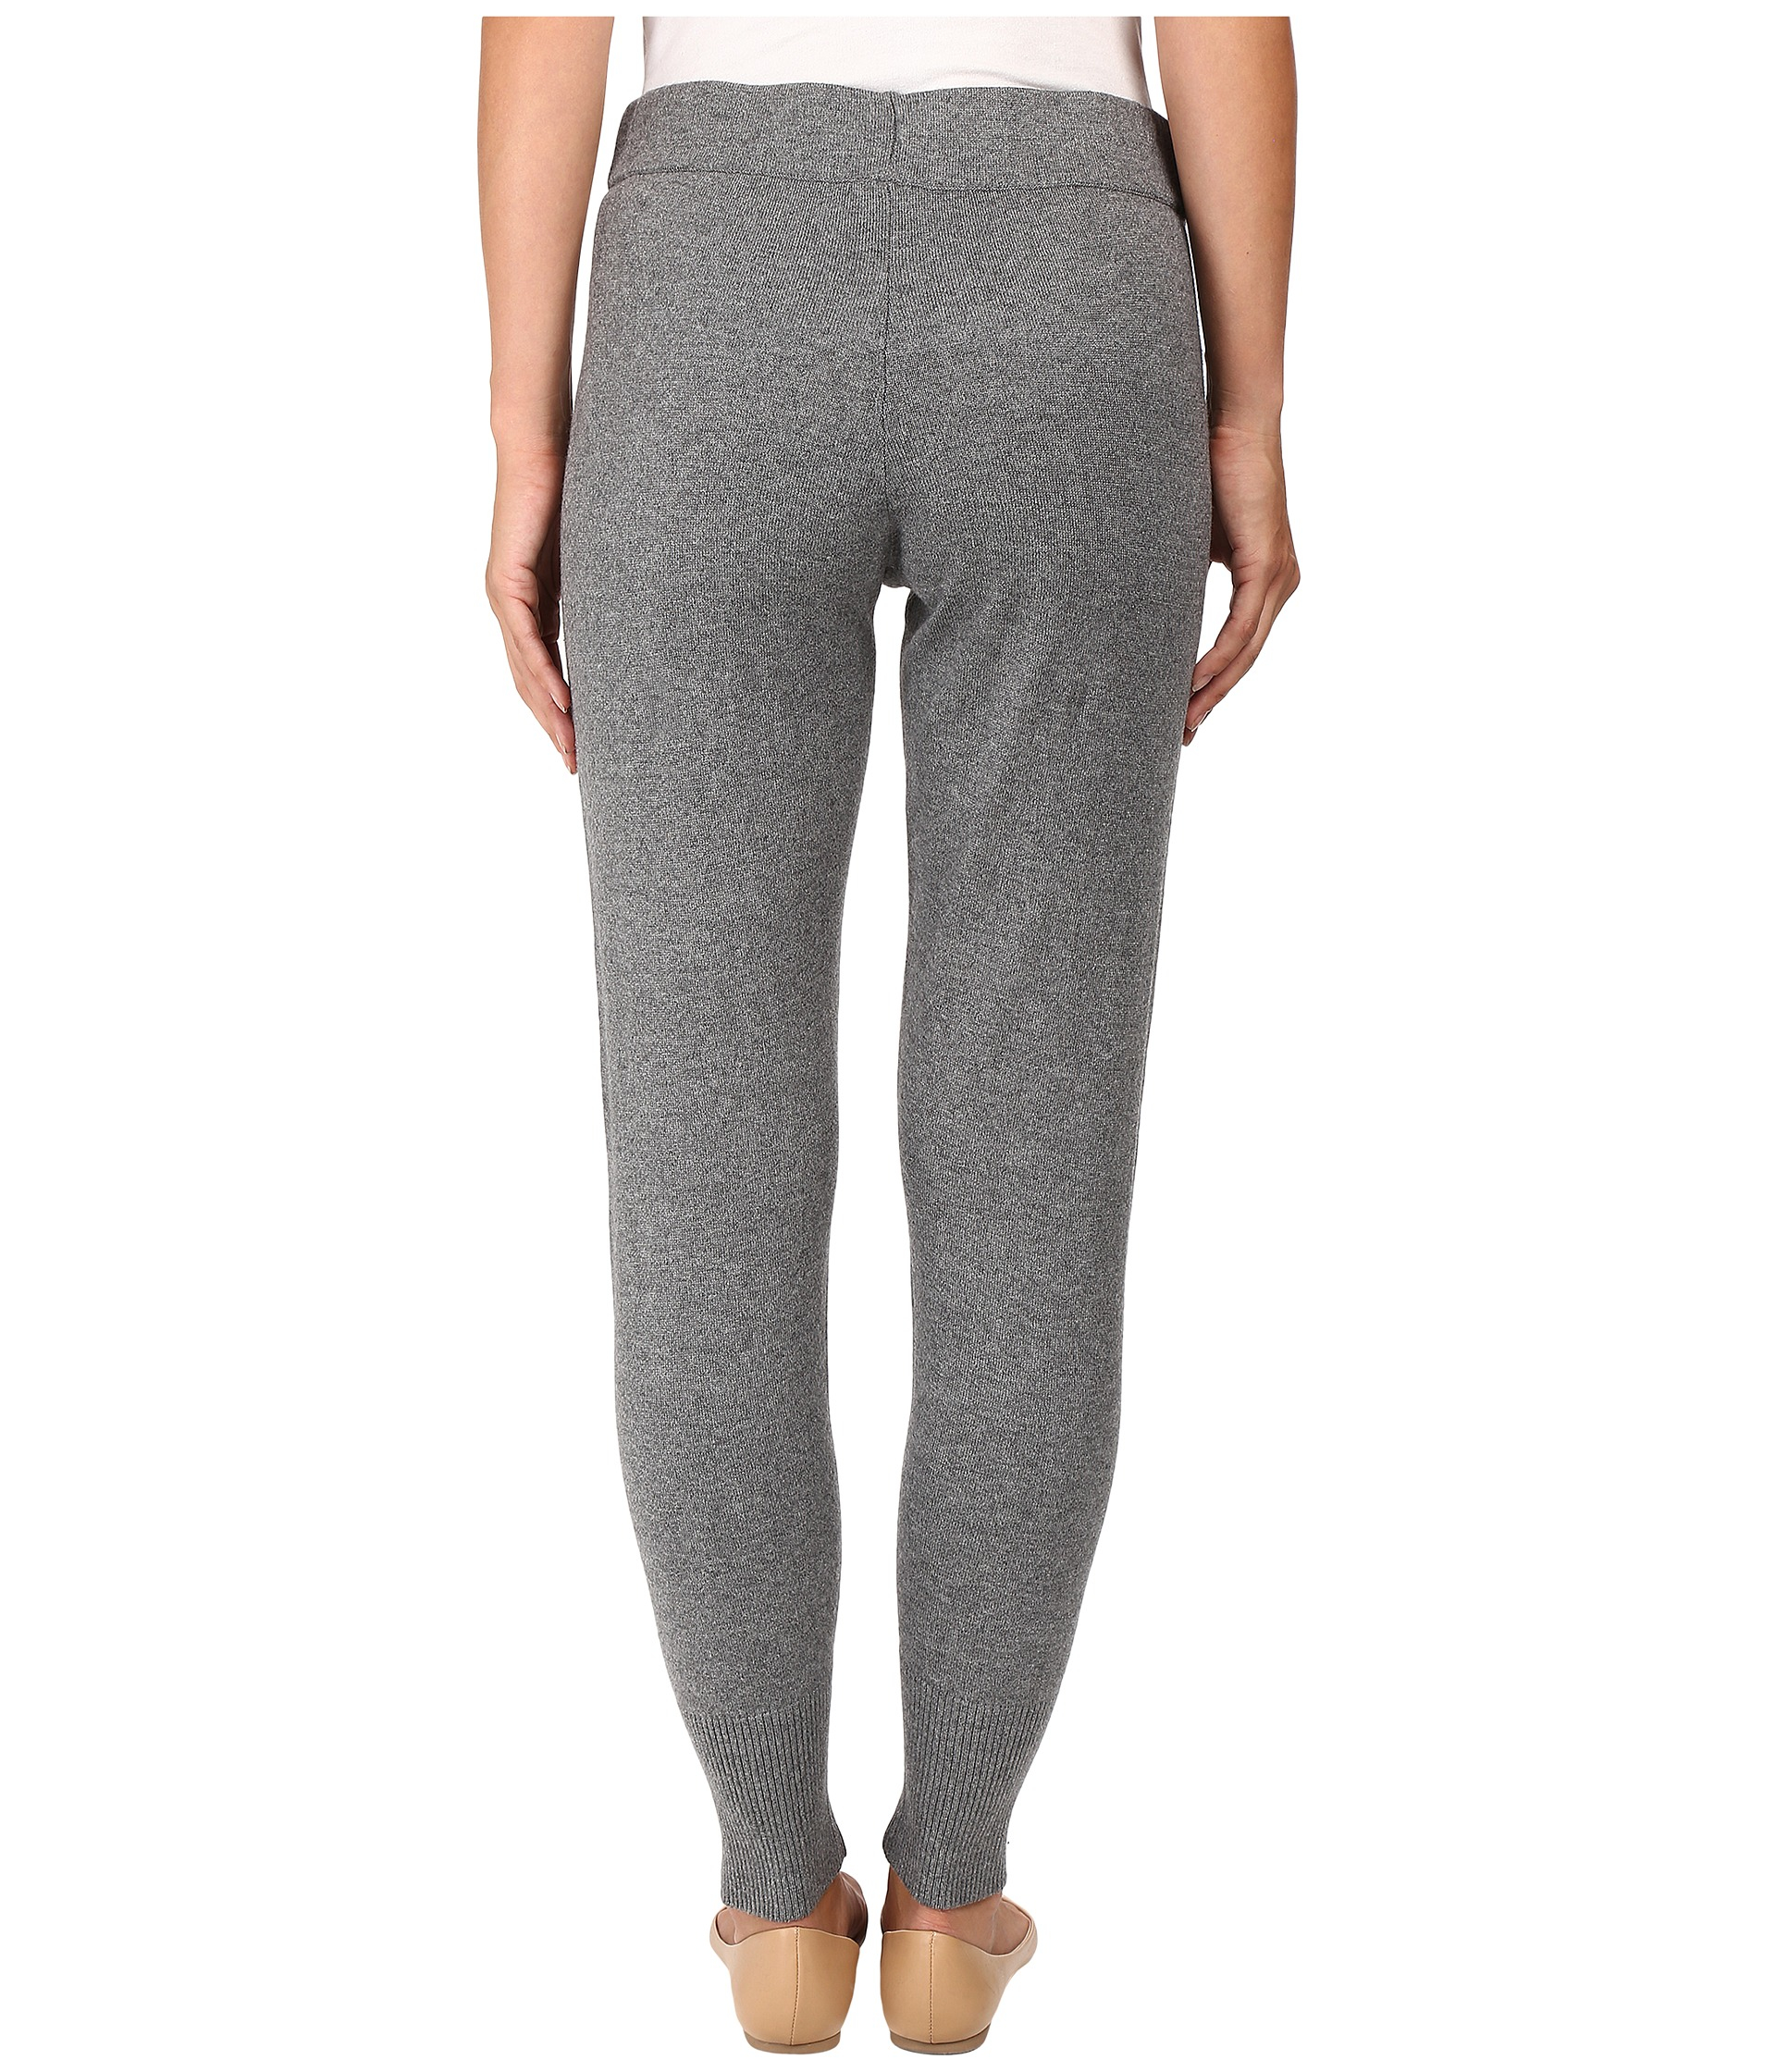 Lyst - Hue Sweater Leggings in Gray